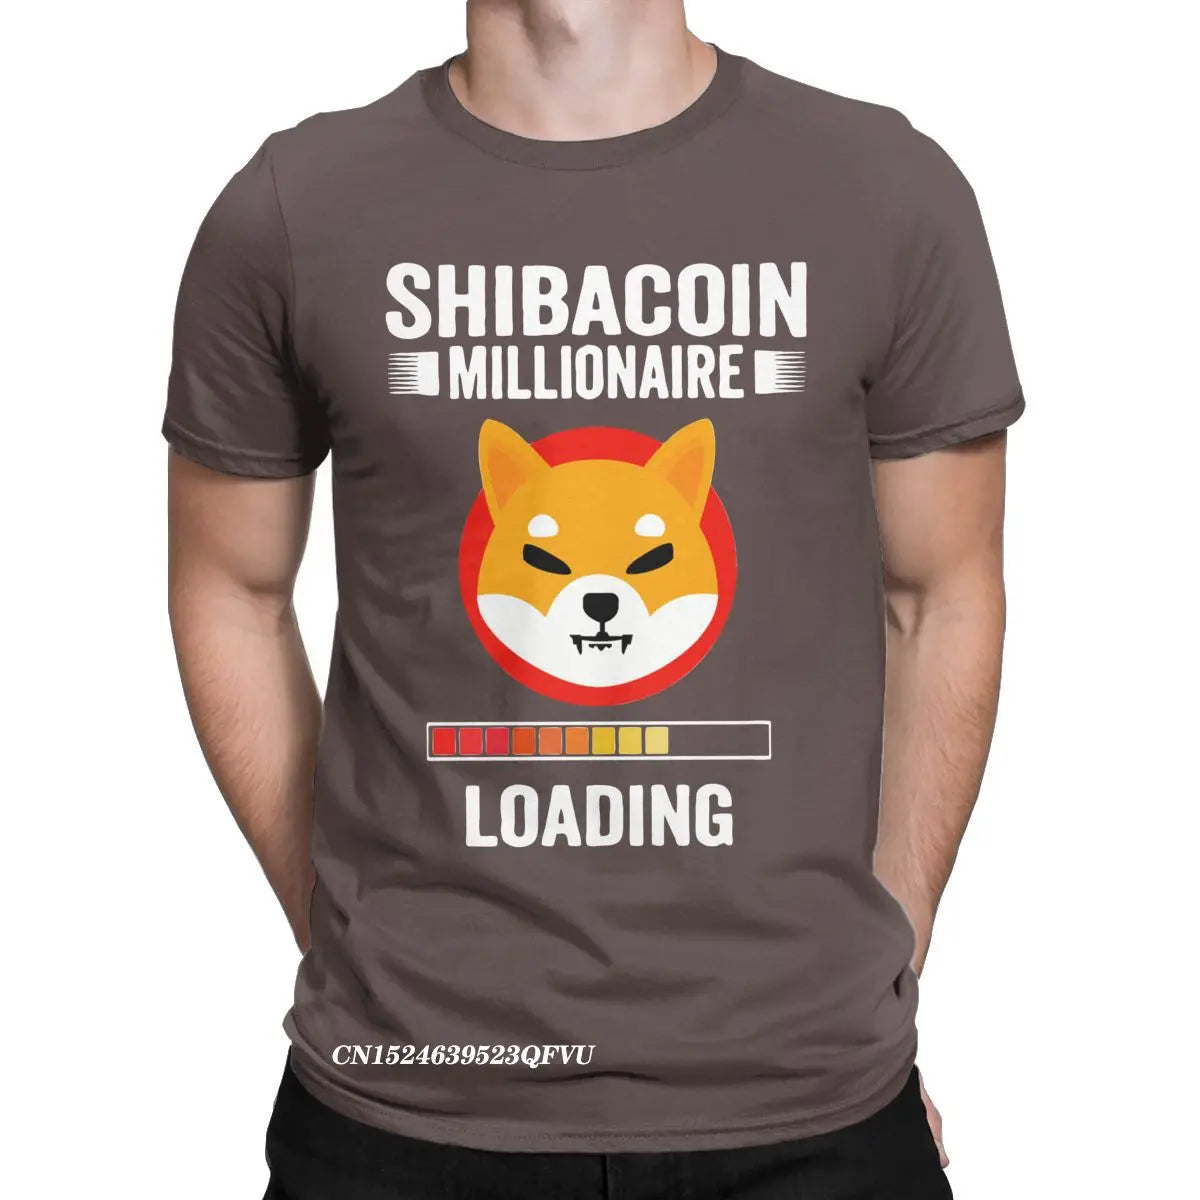 Shiba Inu Hodler T-Shirt For SHIB Millionaires